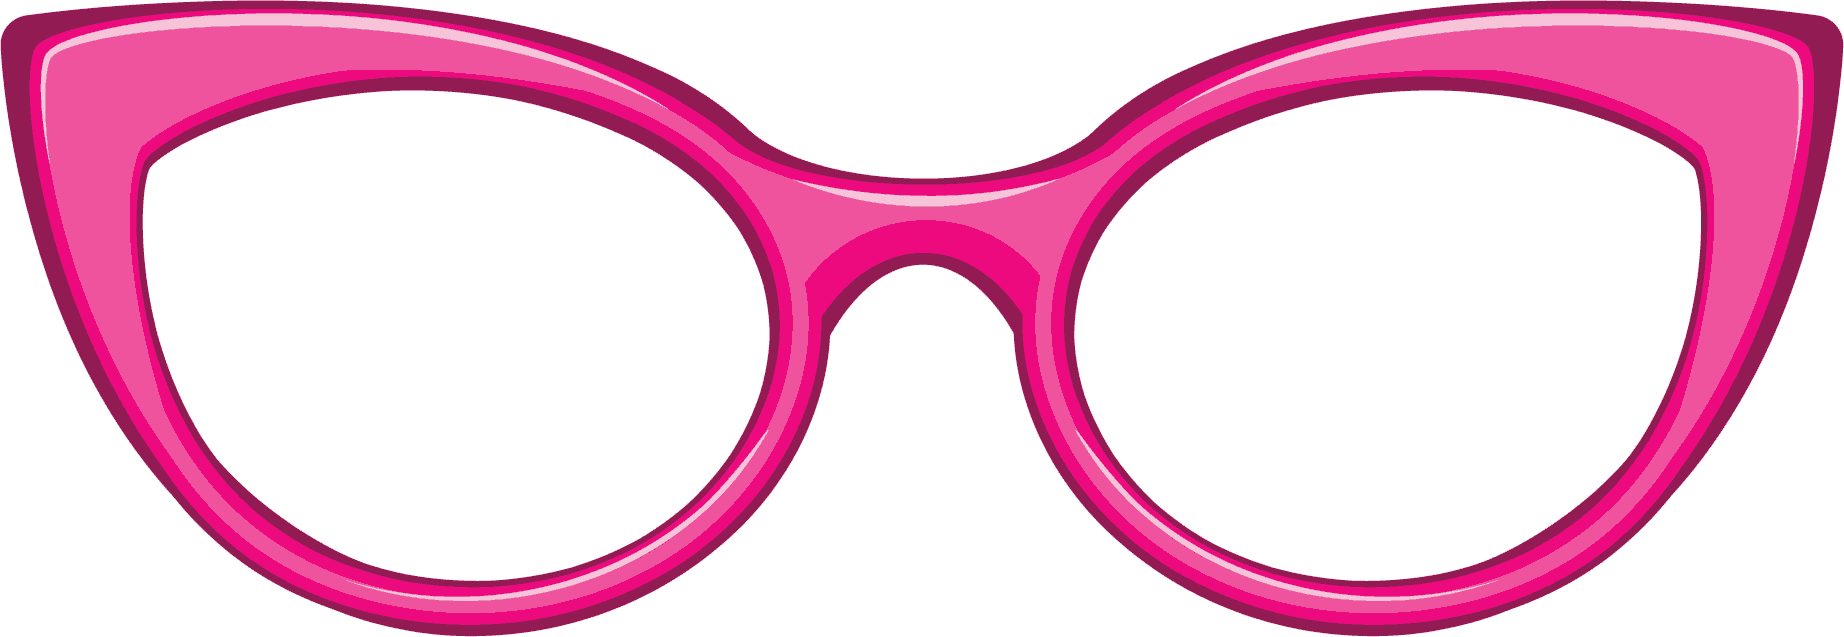 Smiley sunglasses clipartwiz clipartix. Eyeglasses clipart womens glass